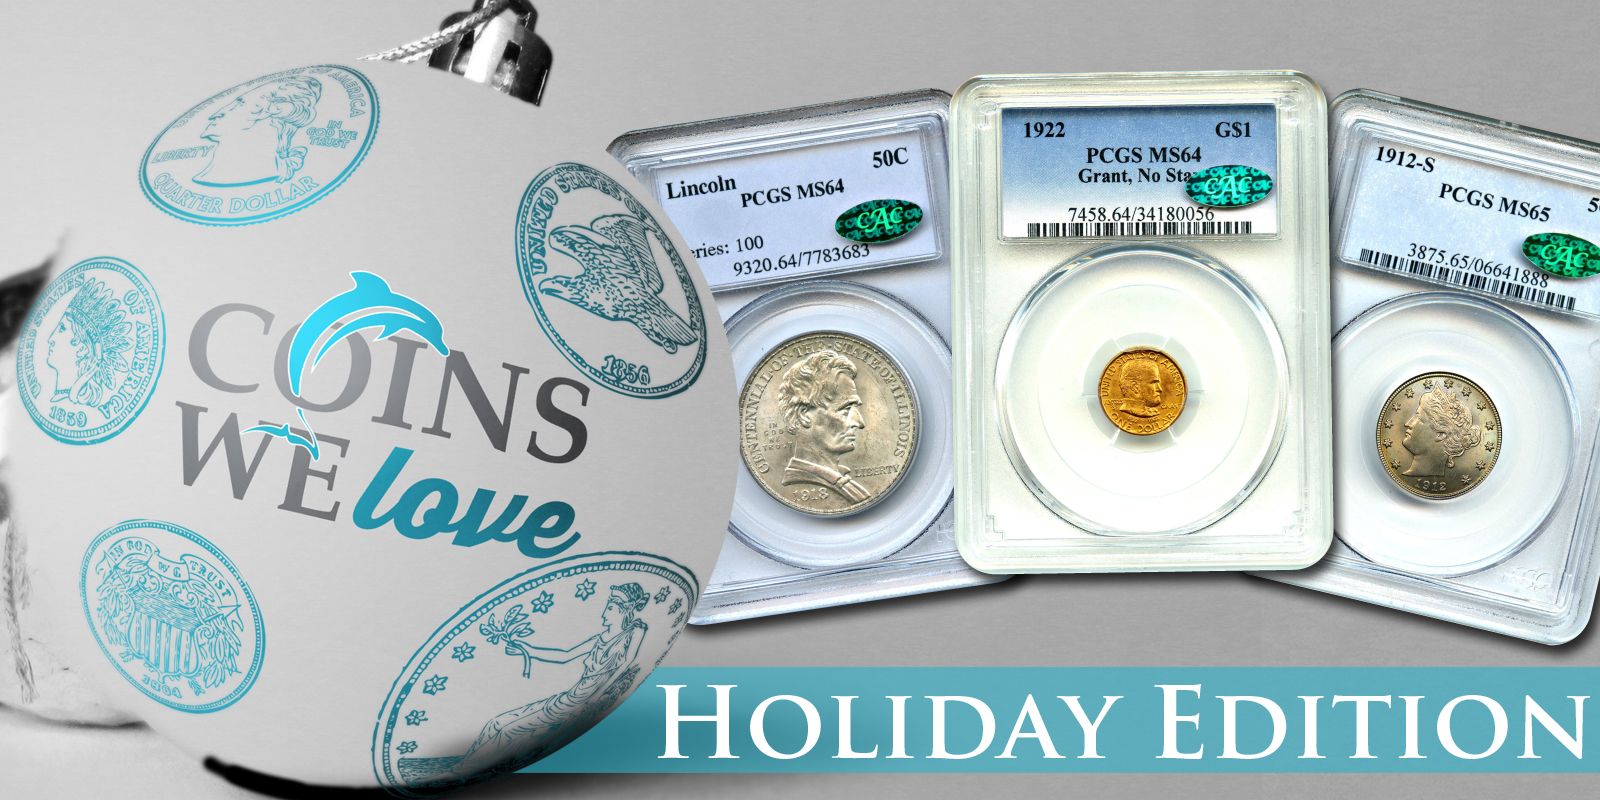 Coins We Love - November 30